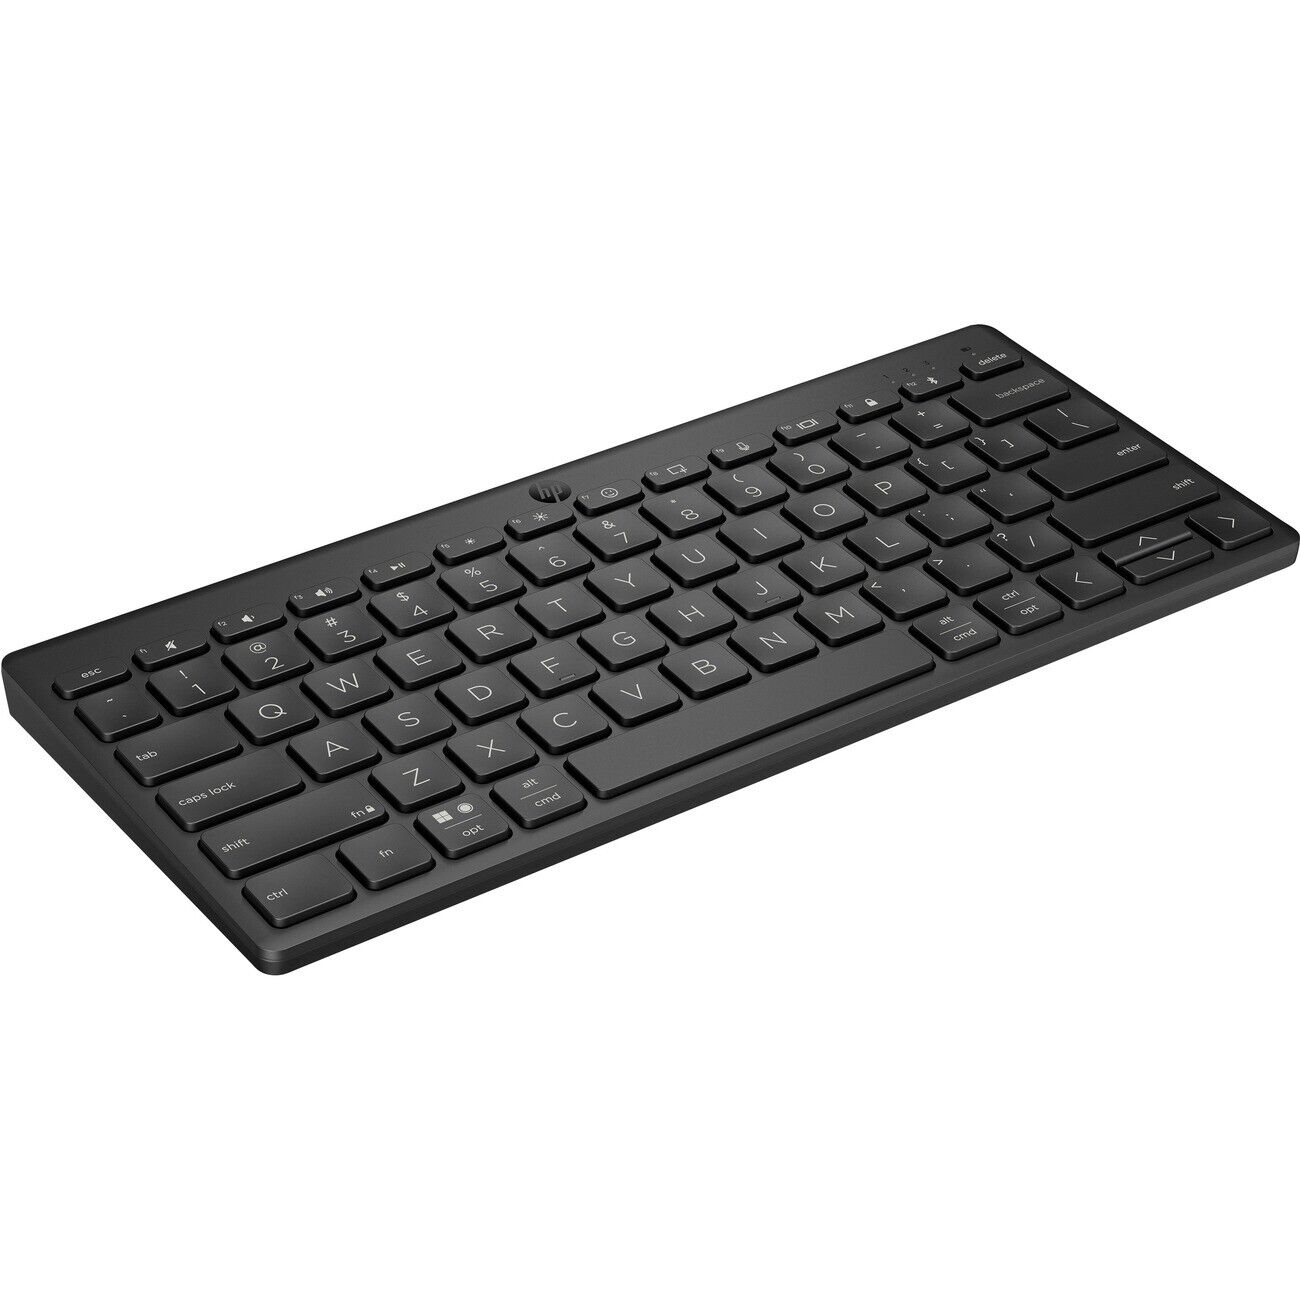 HP Compact 355 Keyboard (692s9aa#abl)